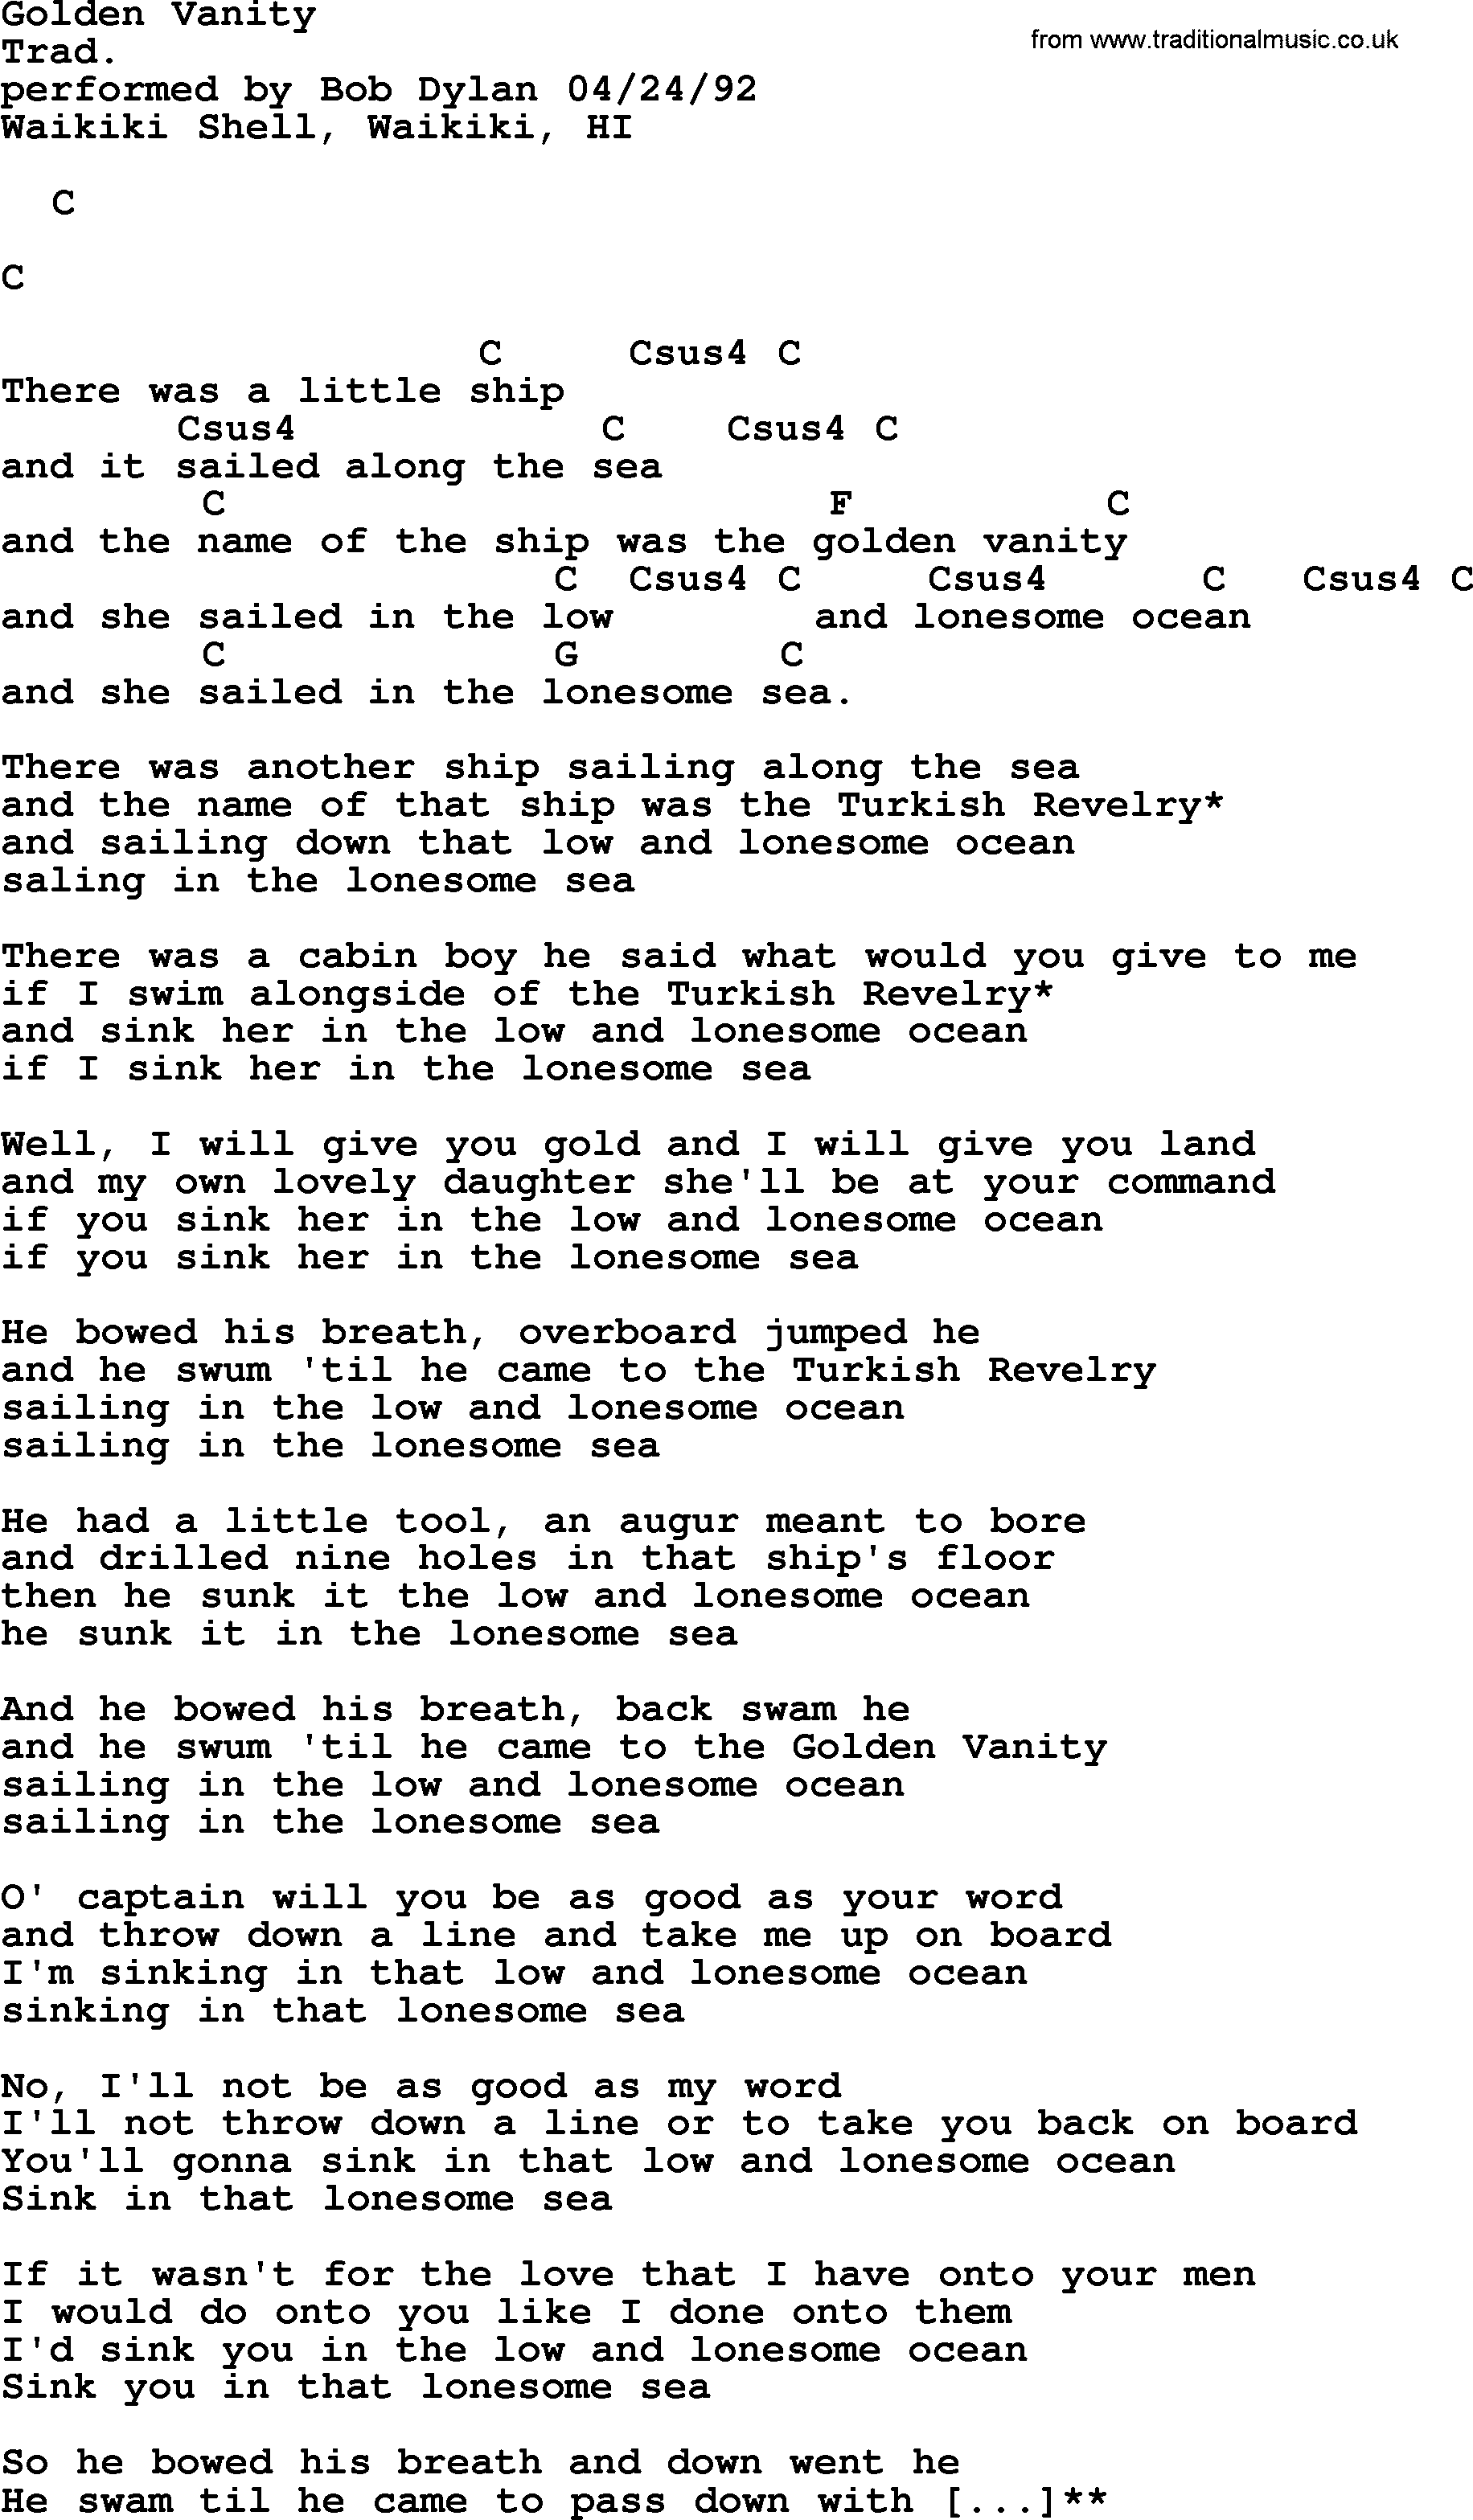 Bob Dylan song, lyrics with chords - Golden Vanity